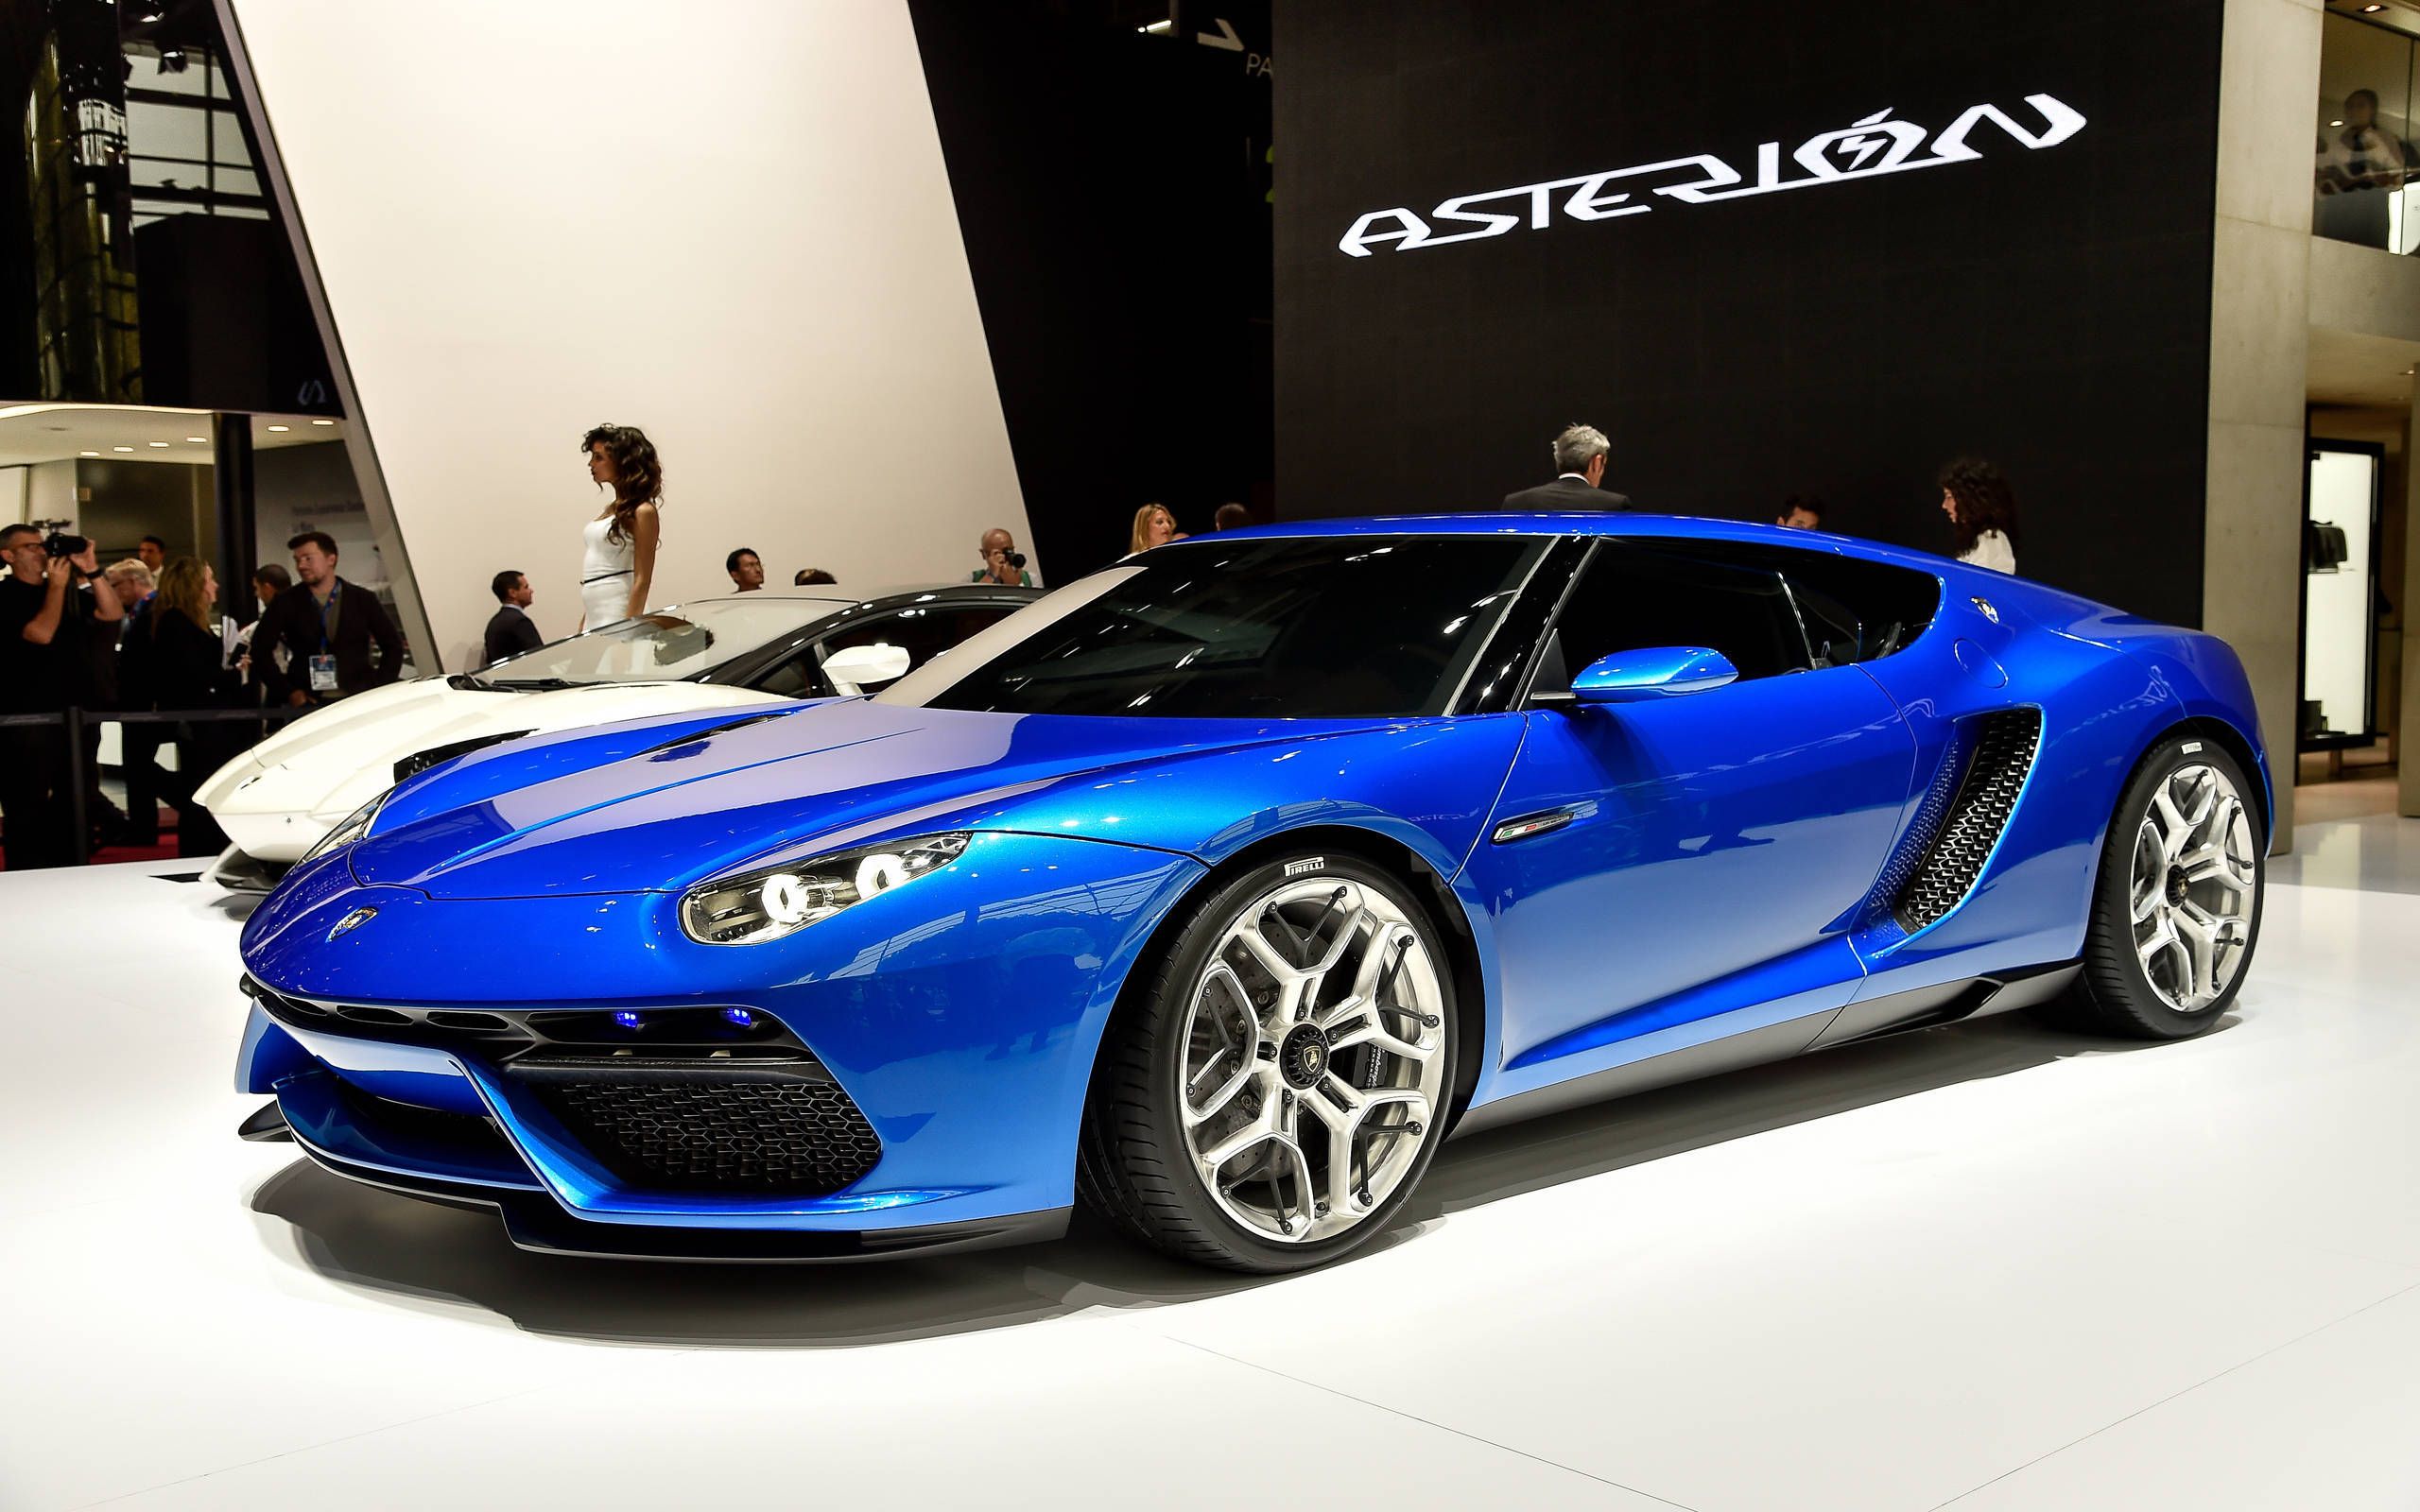 Lamborghini surprises at Paris motor show with 910-hp hybrid Asterion